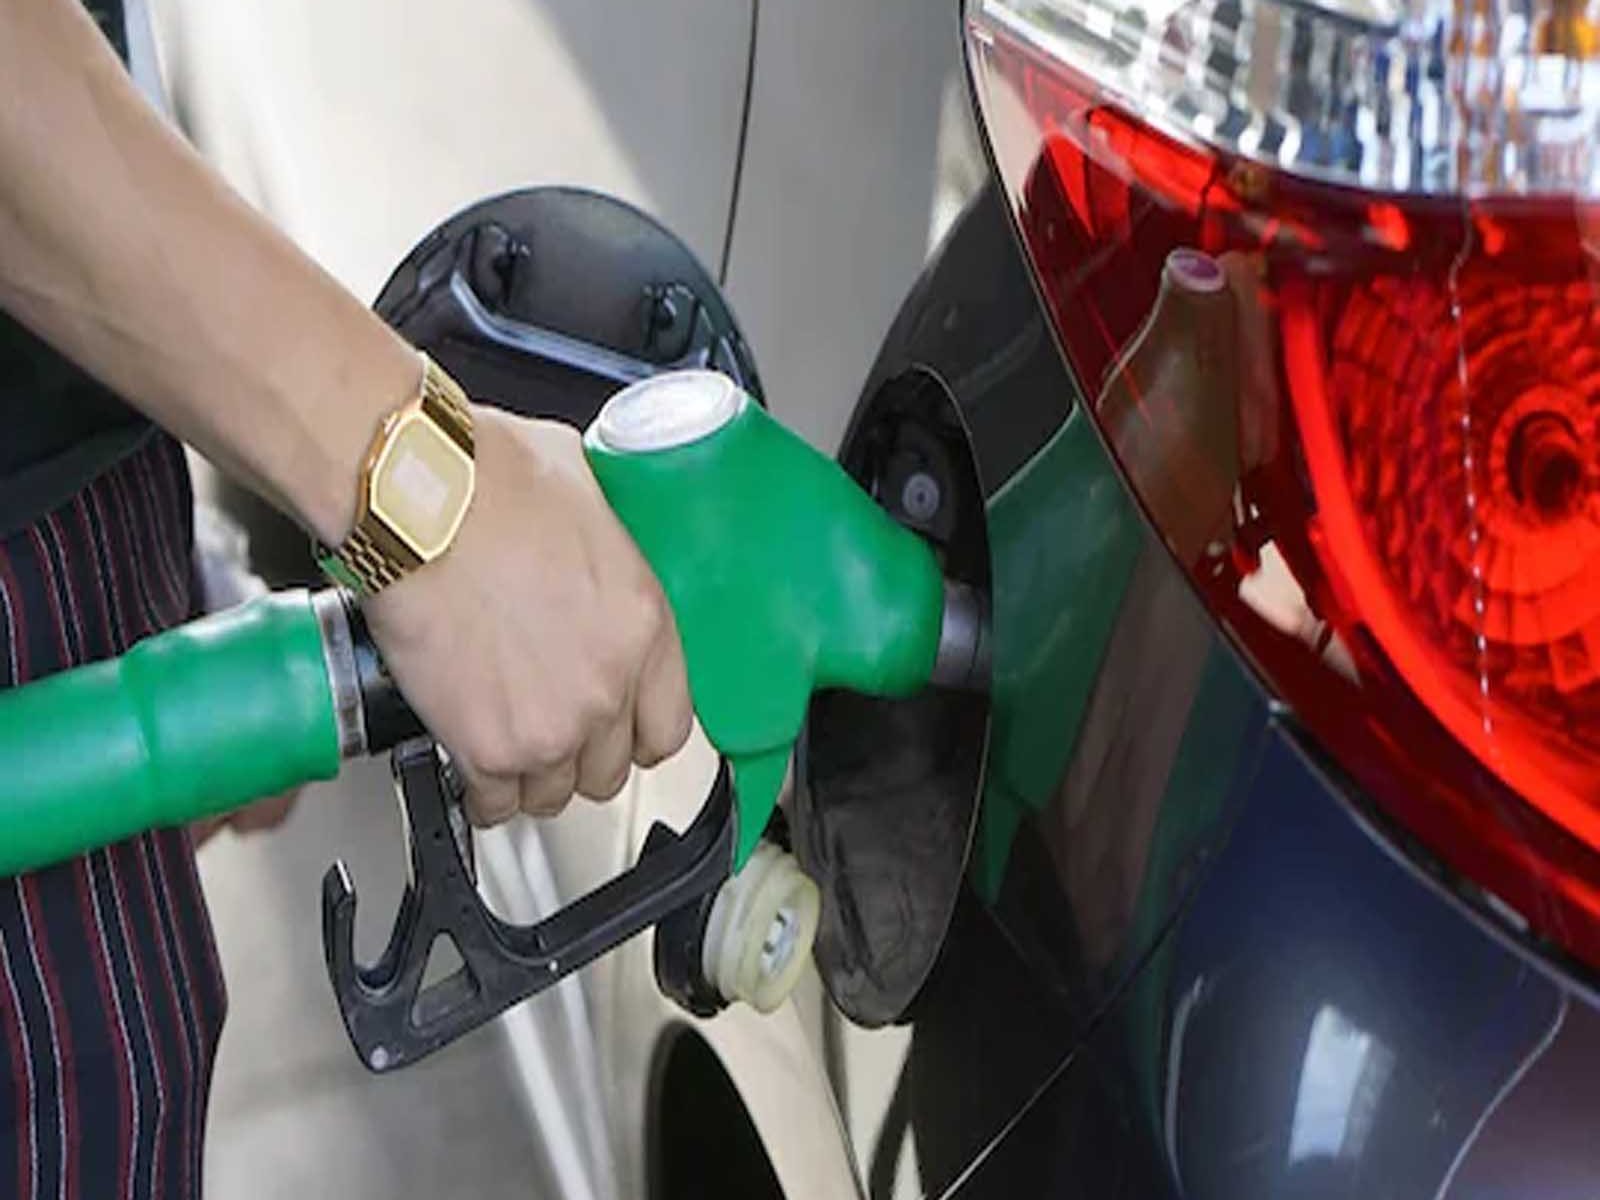 Petrol Diesel Prices Today: ਕਈ ਛੋਟੇ ਸ਼ਹਿਰਾਂ 'ਚ ਬਦਲੀਆਂ ਪੈਟਰੋਲ-ਡੀਜ਼ਲ ਦੀਆਂ ਕੀਮਤਾਂ
